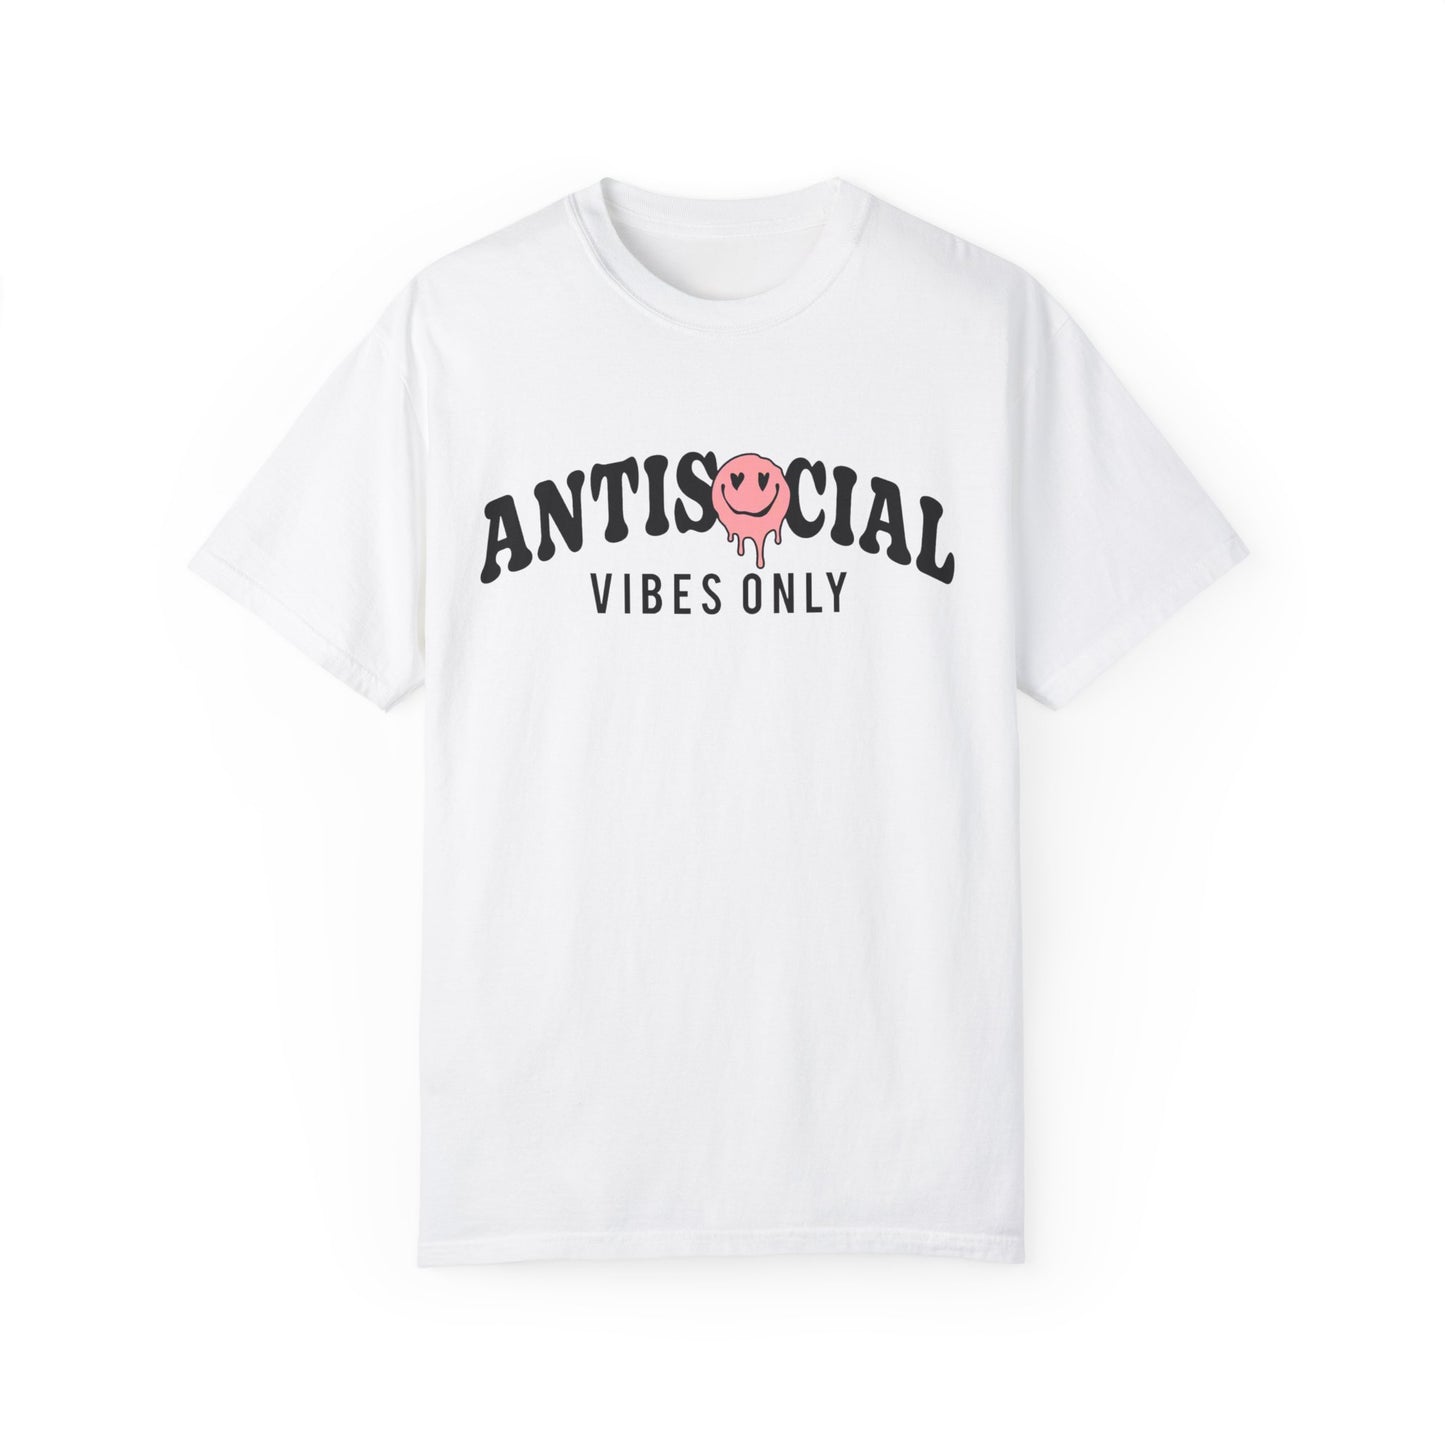 Antisocial Vibes Shirt